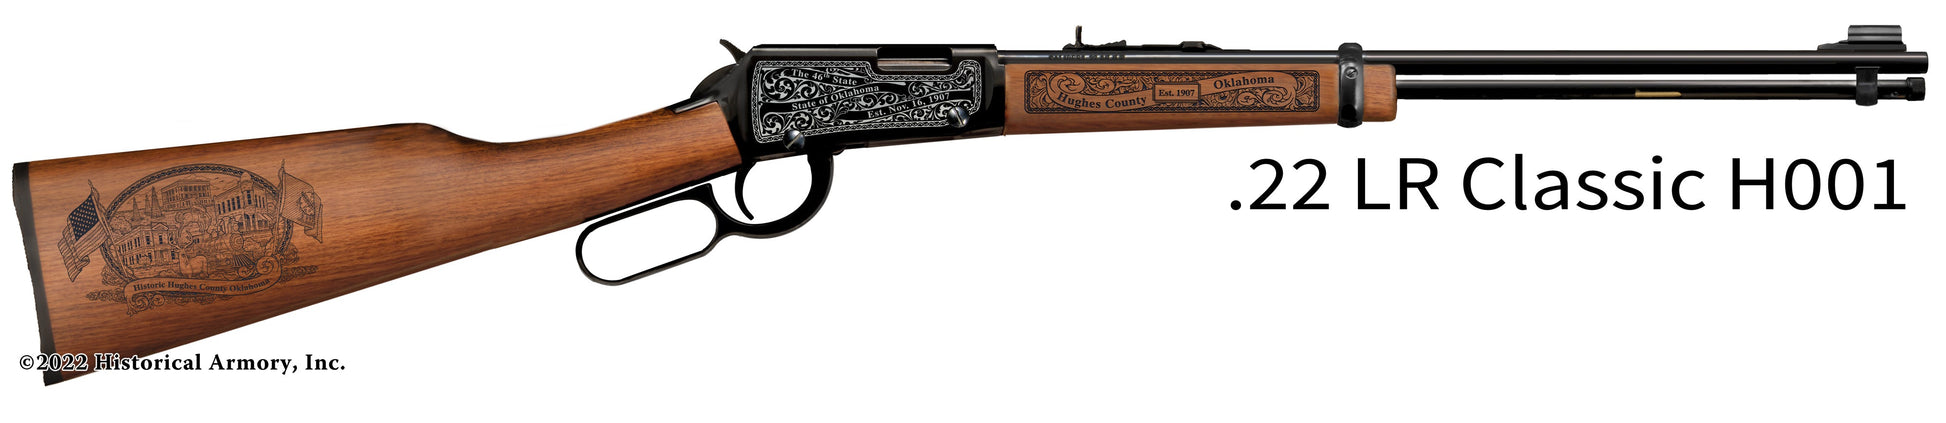 Hughes County Oklahoma Engraved Henry H001 Rifle